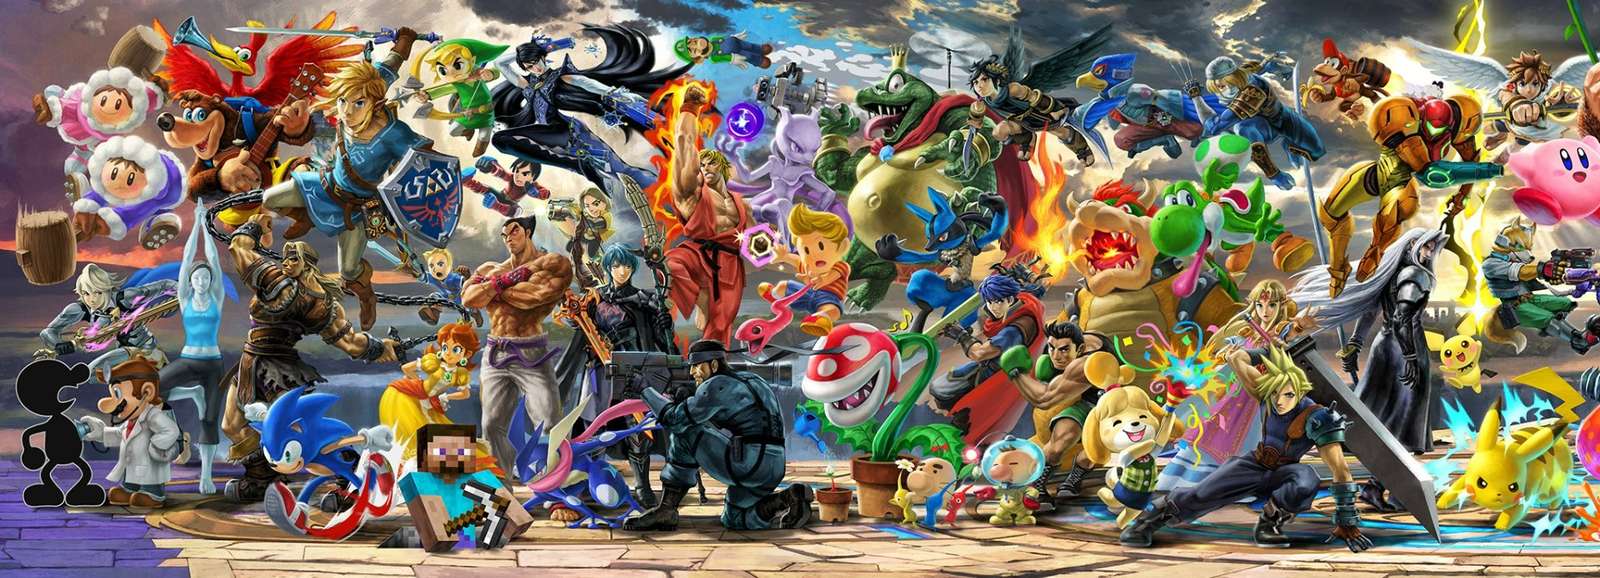 Super Smash Bros Ultimate falfestmény, bal fele kirakós online